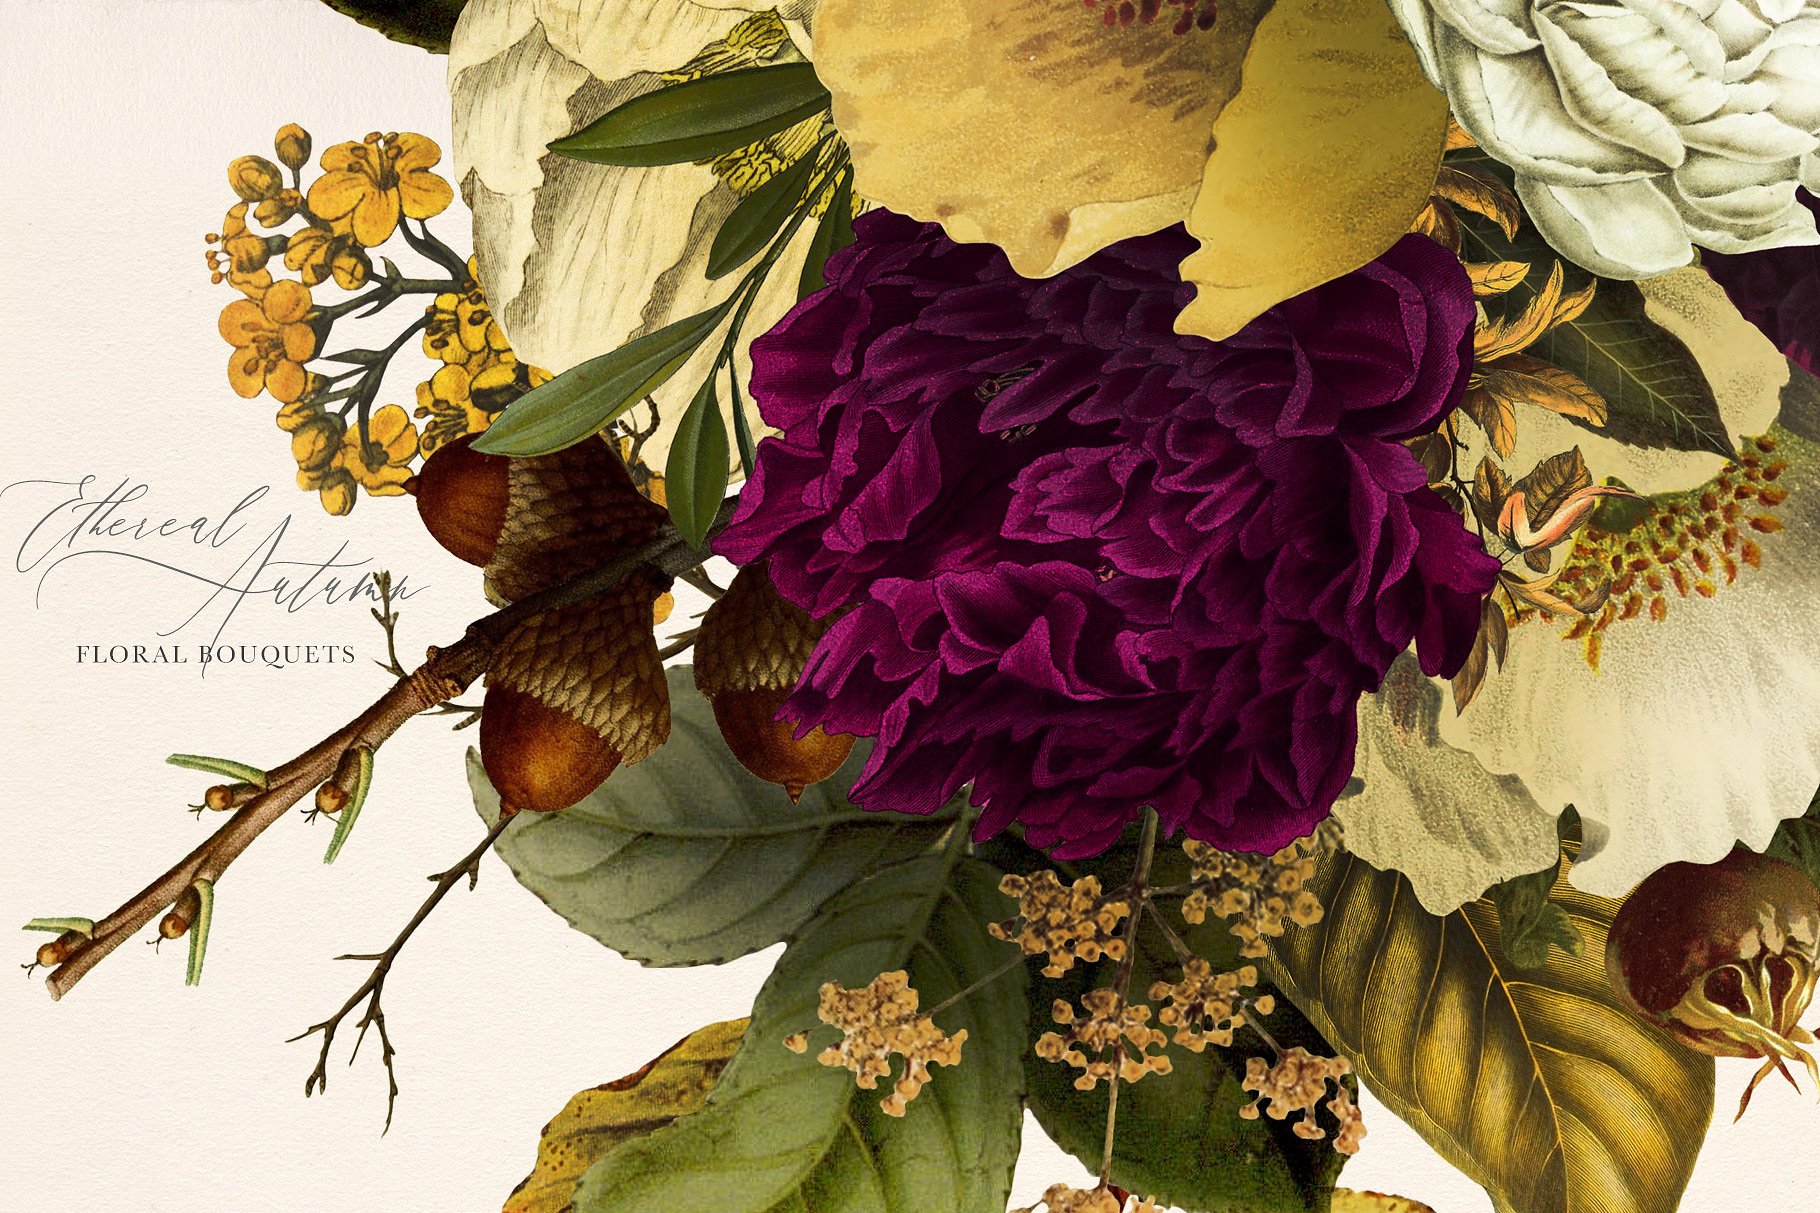 栩栩如生的秋天花束插画 Ethereal Autumn Floral Bouquets插图(6)